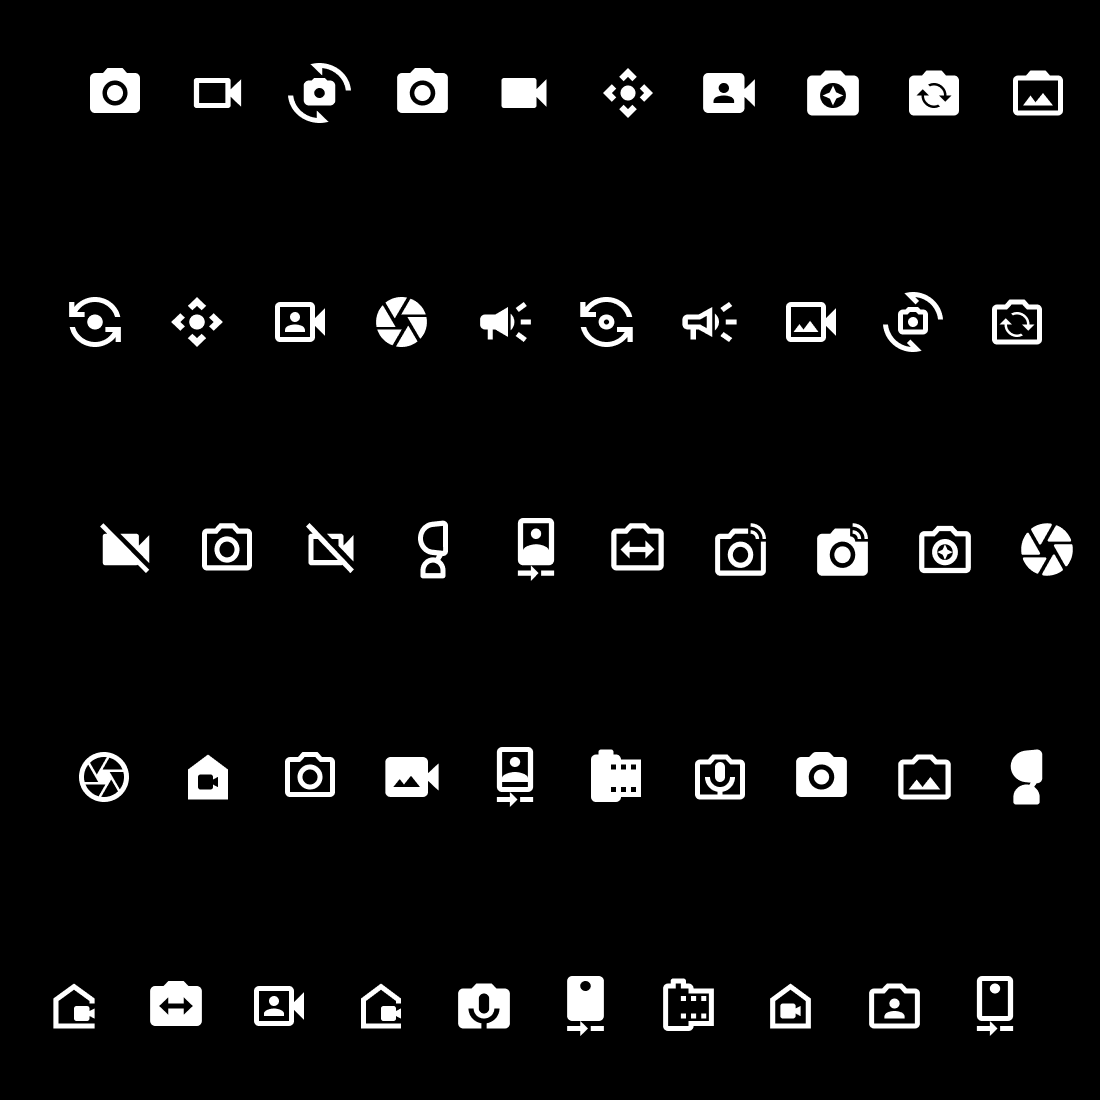 Google Material UI Icons Design Bundle cover image.